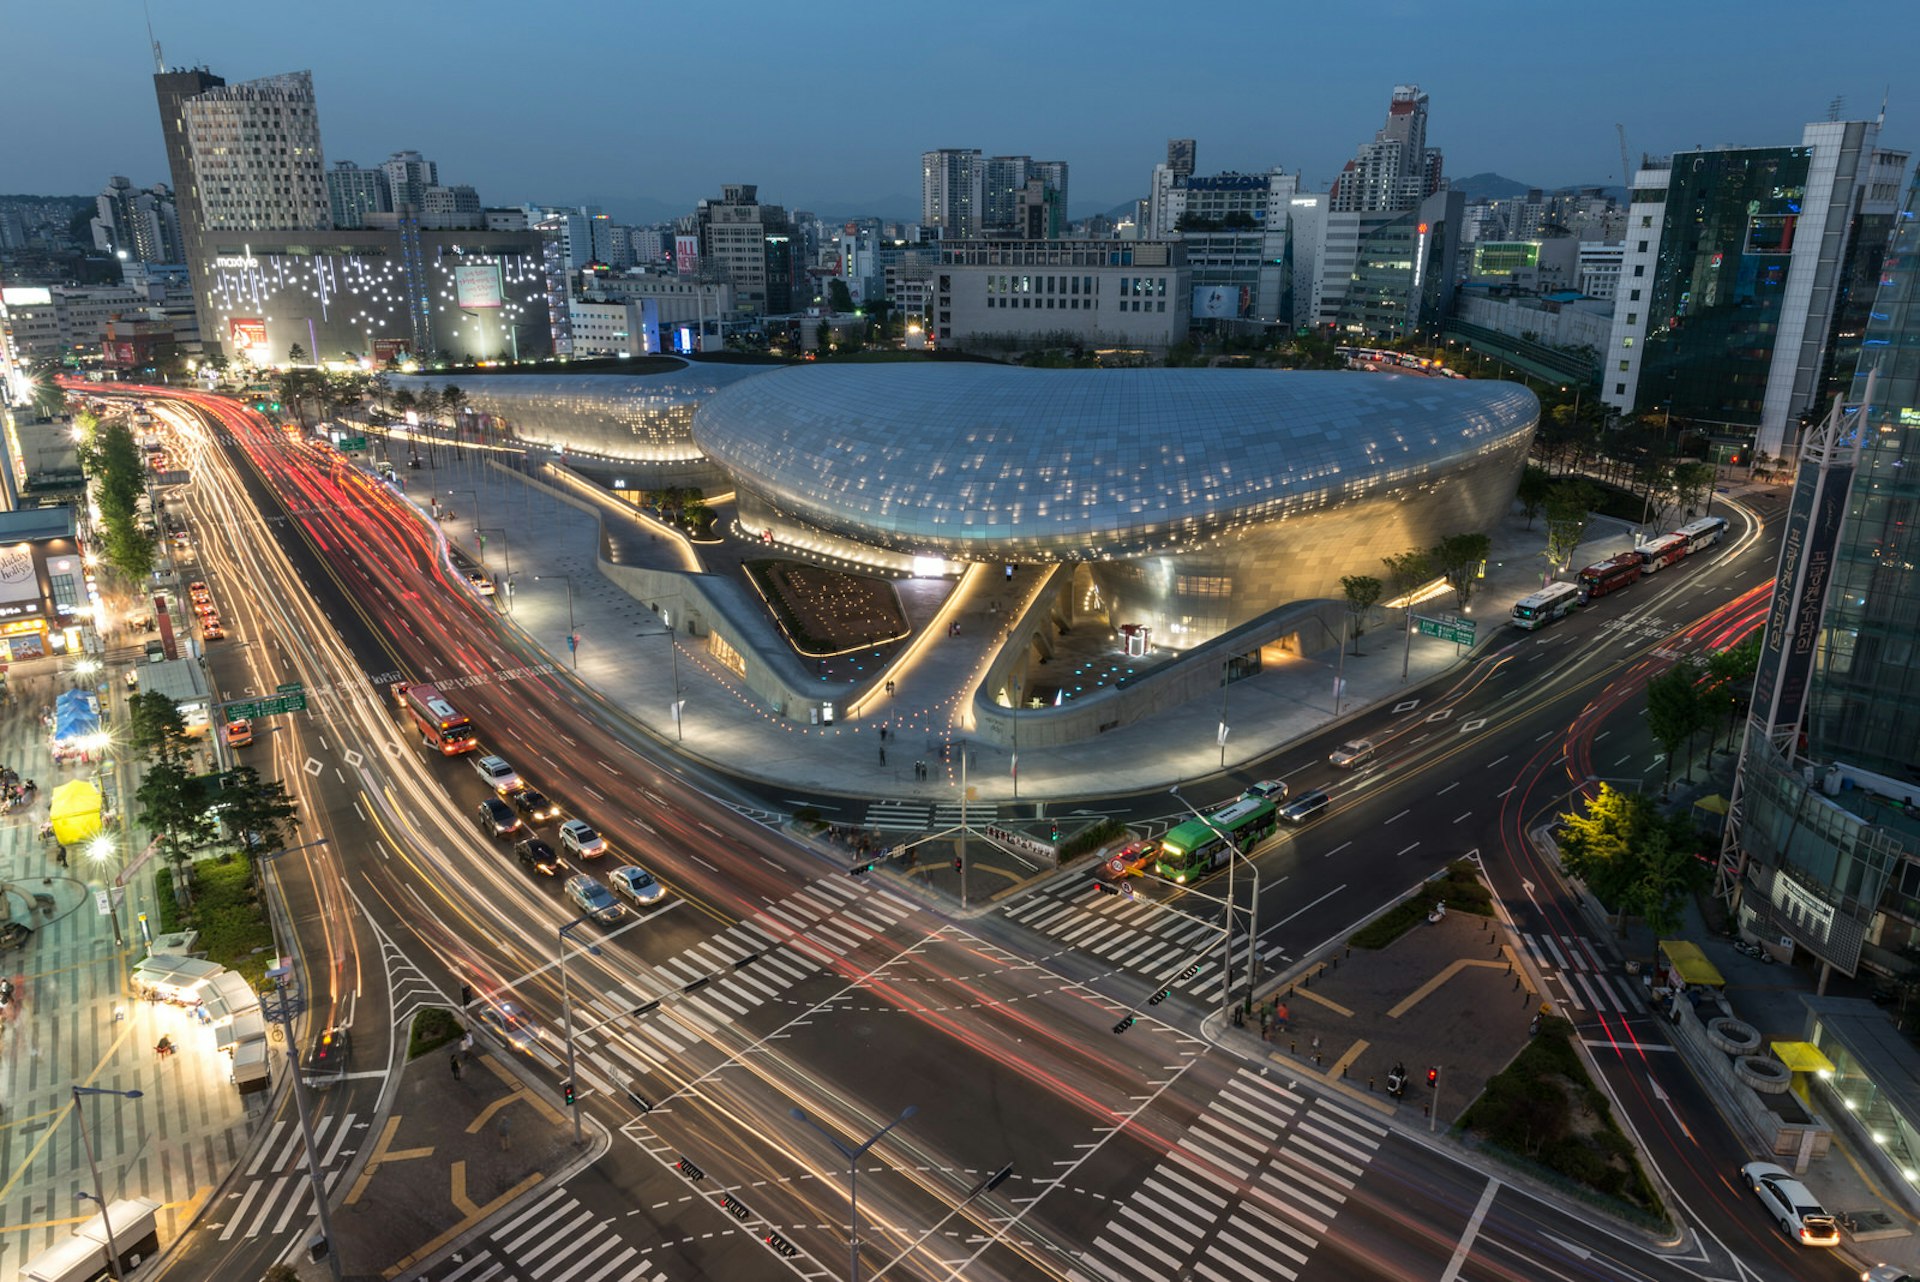 The UFO-like Dongdaemun Design Plaza © John Steele / Getty